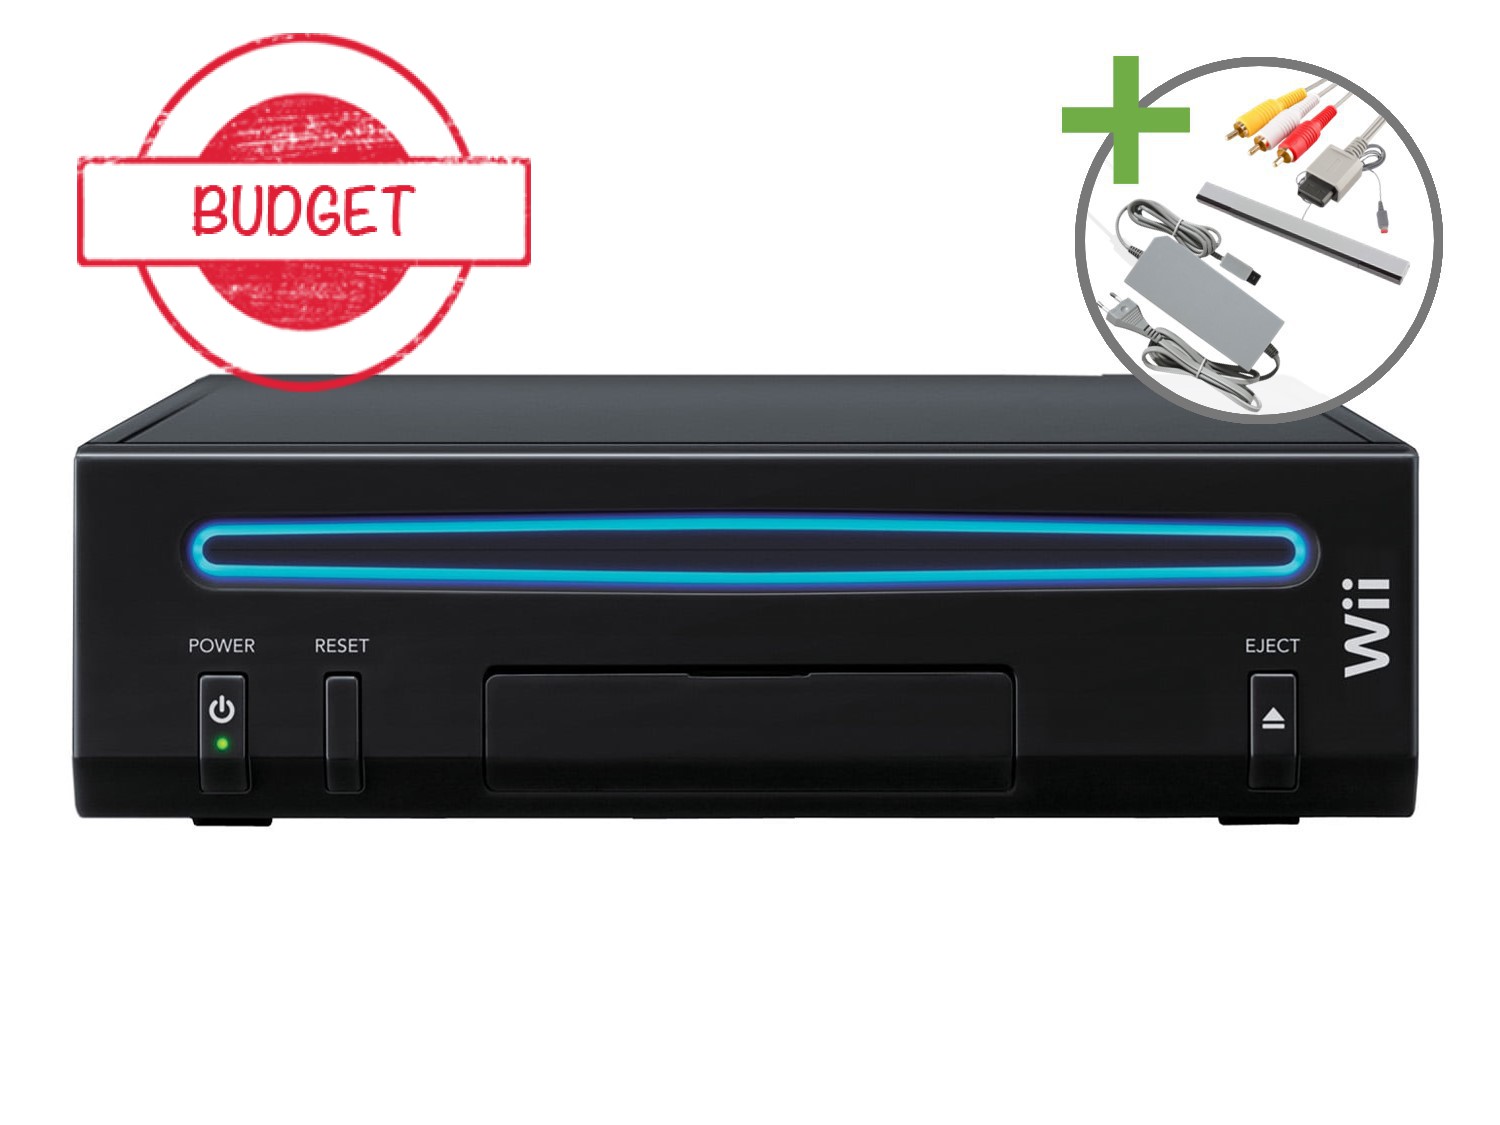 Nintendo Wii Starter Pack - Motion Plus Black Edition - Budget - Wii Hardware - 2